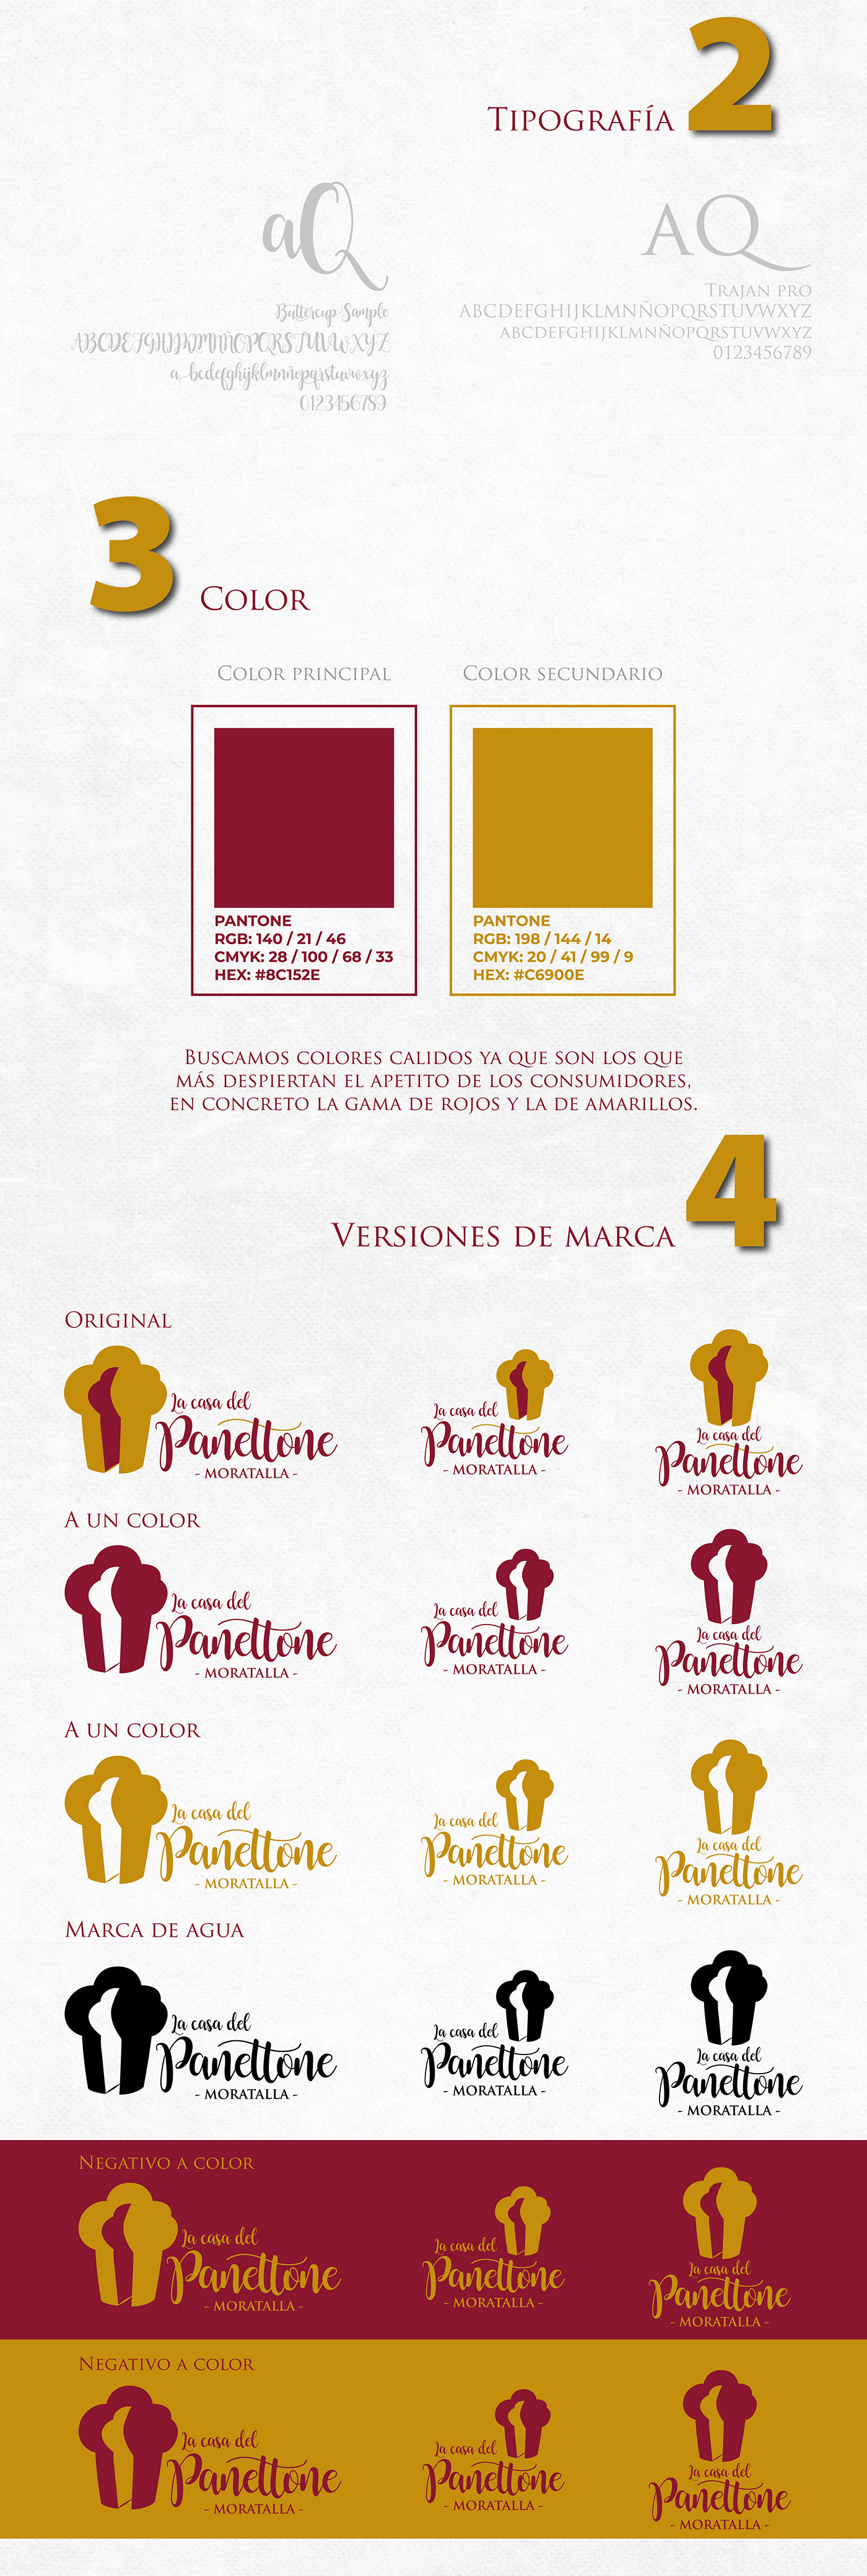 panettone Identidad Corporativa branding  Web Diseño web Packaging La Casa imagen corporativa